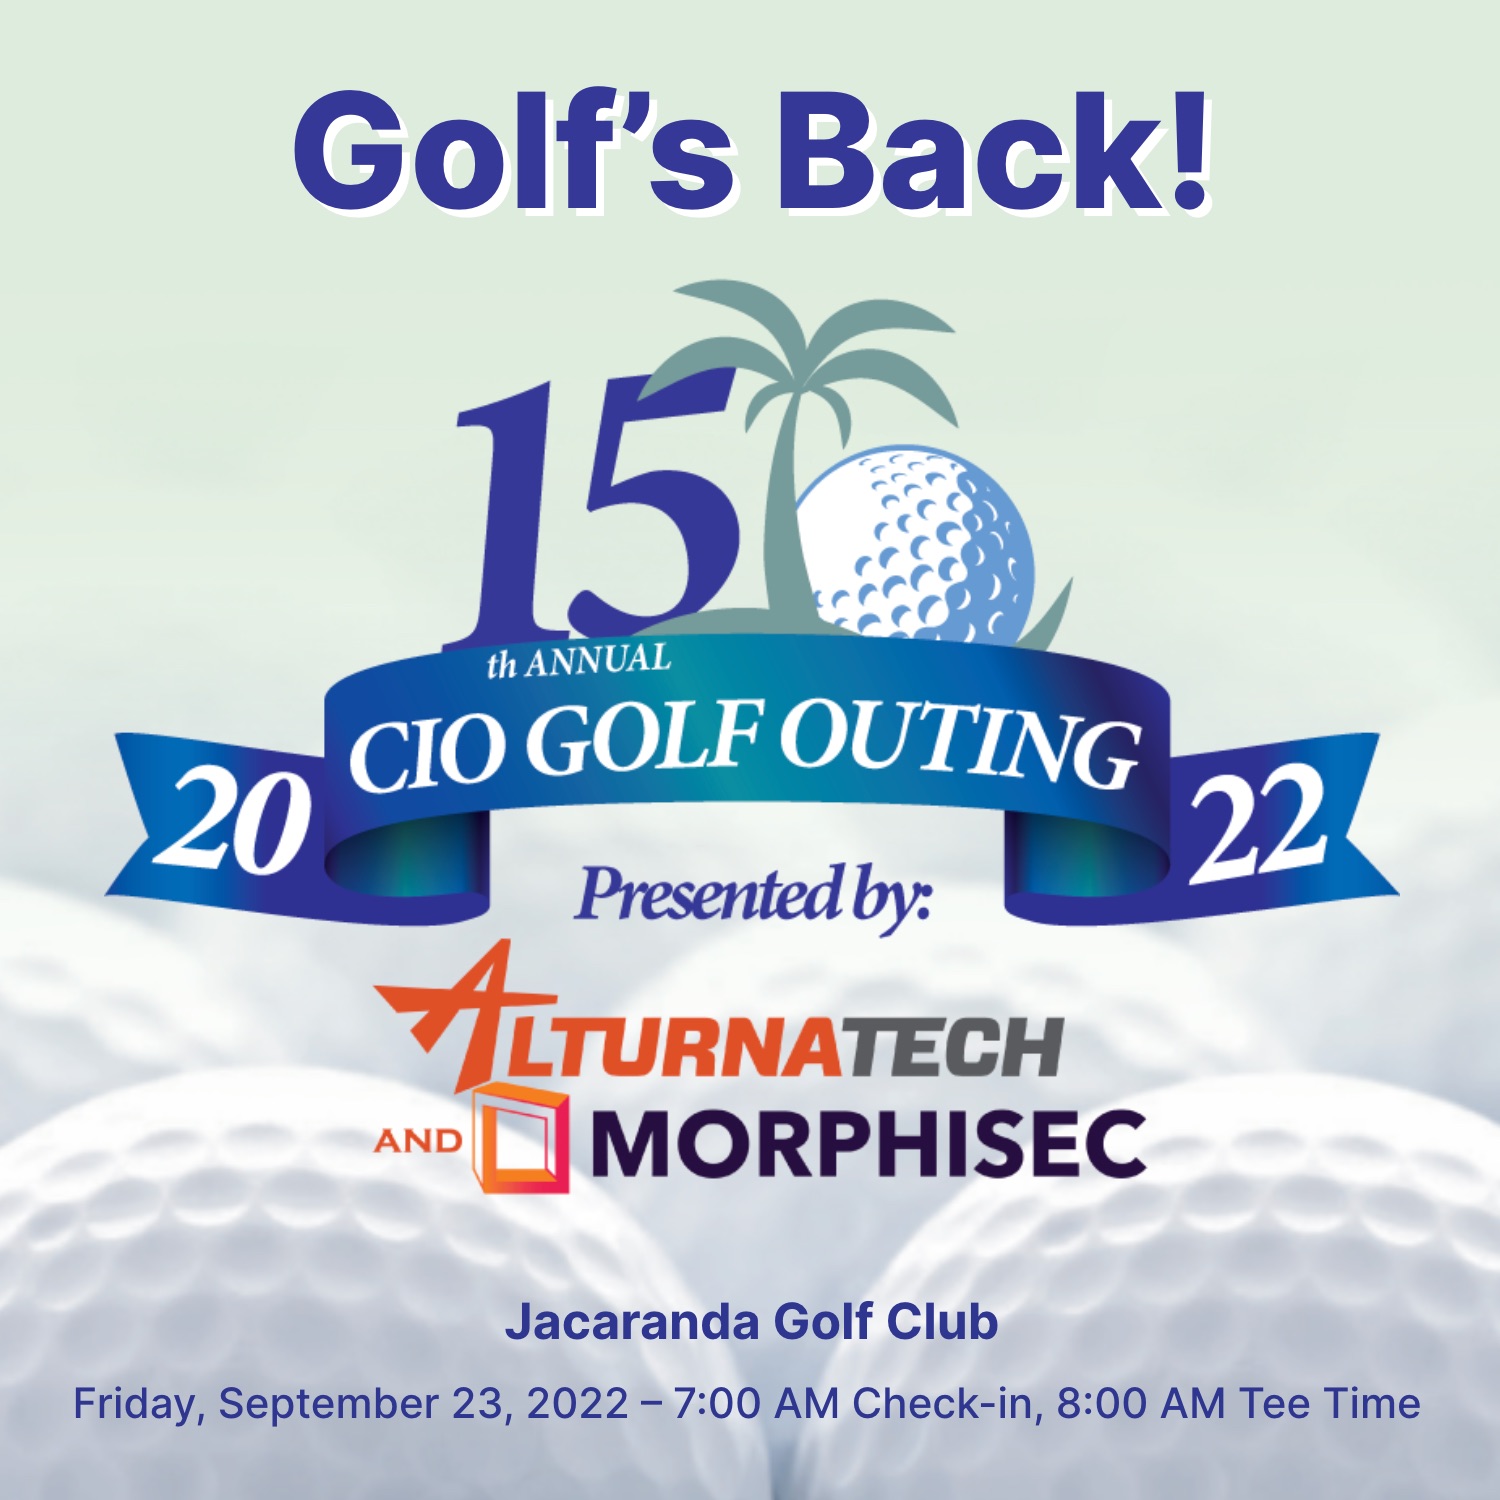 Golf’s Back! 15th Annual CIO Golf Outing – Jacaranda! Friday, Sept 23